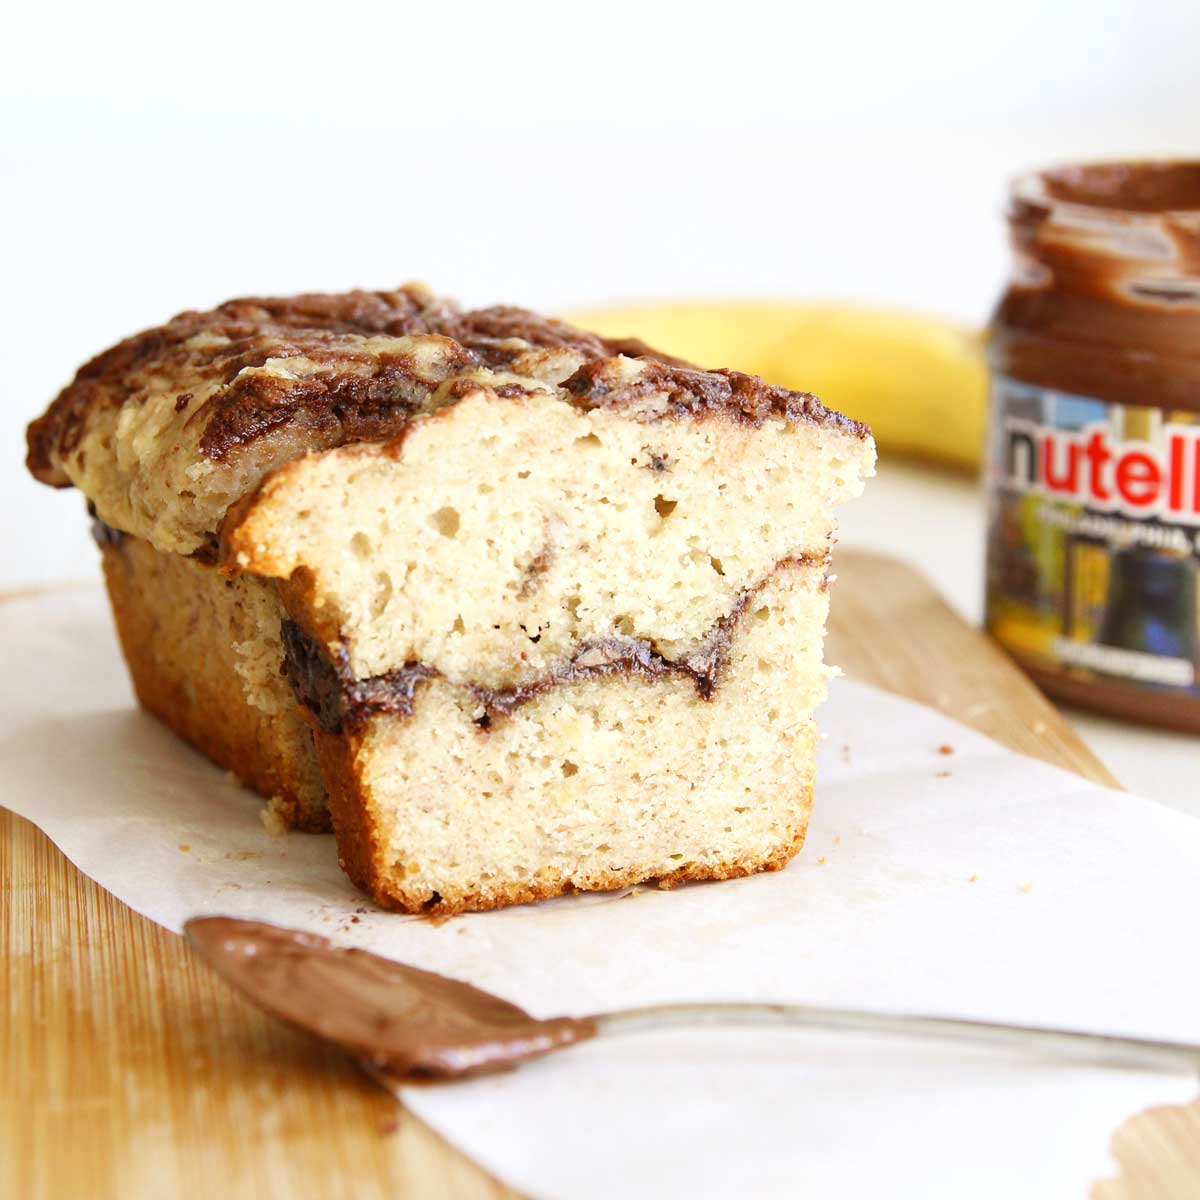 Super Moist Nutella Stuffed Banana Bread with Olive Oil & Almond Flour - Birthday Cake Banana Bread